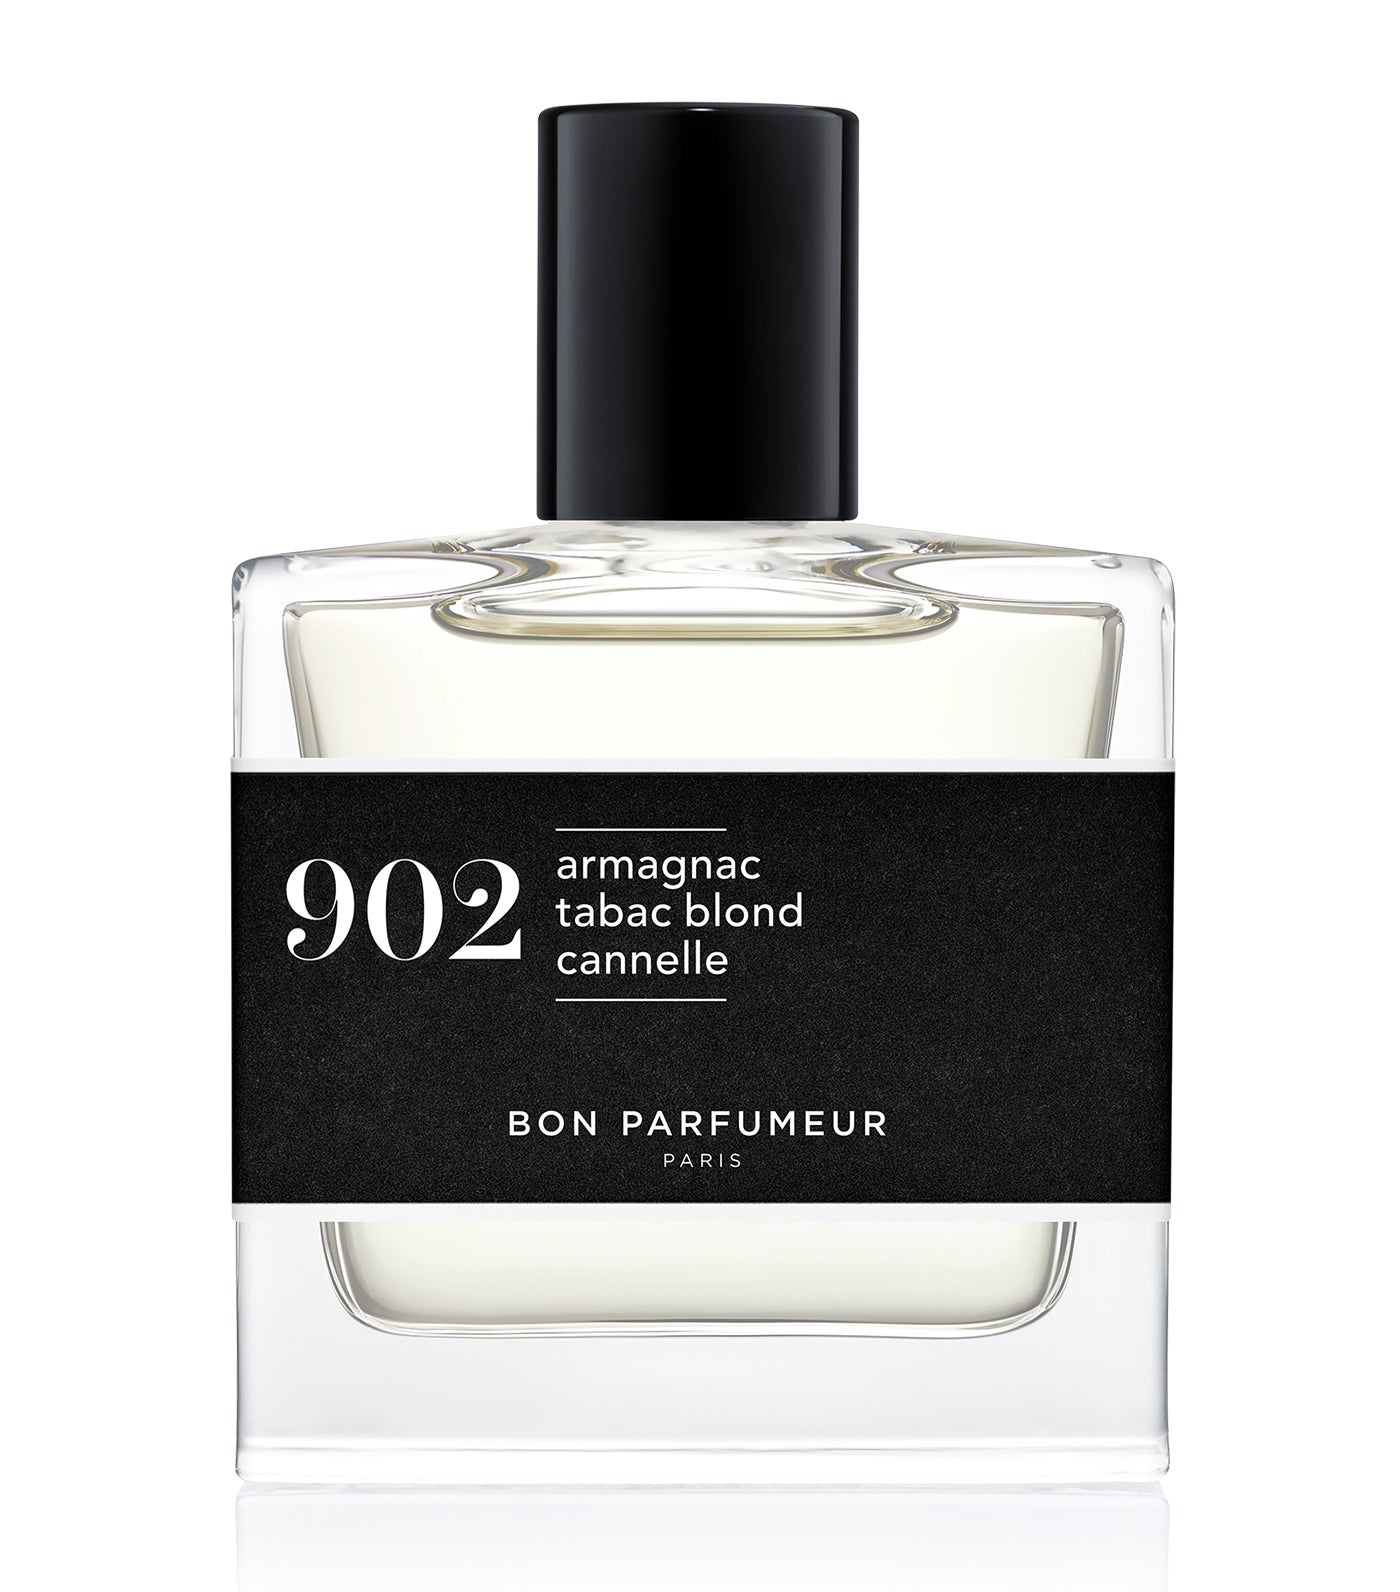 Eau de parfum 902 : armagnac, blond tobacco and cinnamon